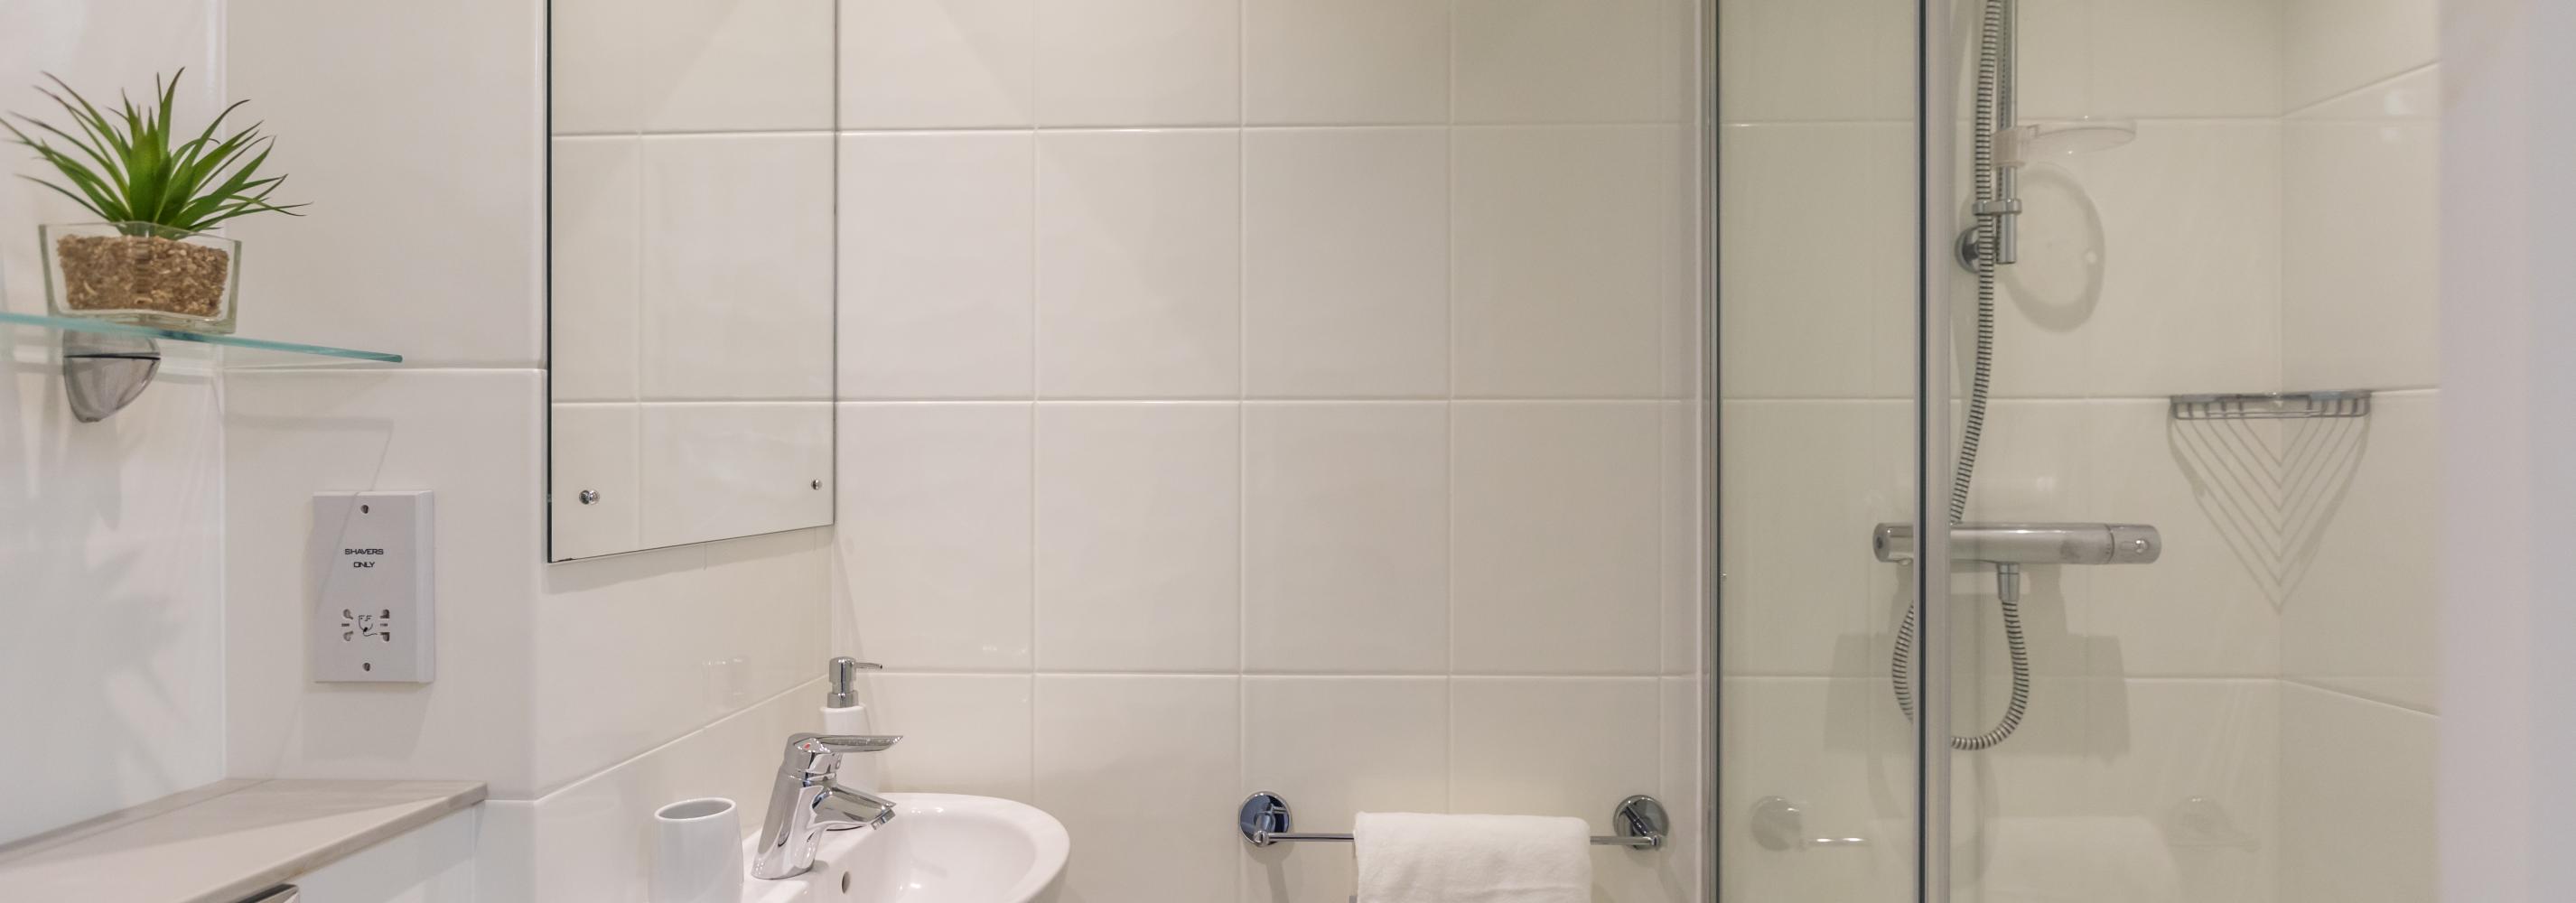 Bathroom, mirror, shelves, towel rail, toilet, sink, toilet roll holder and shower